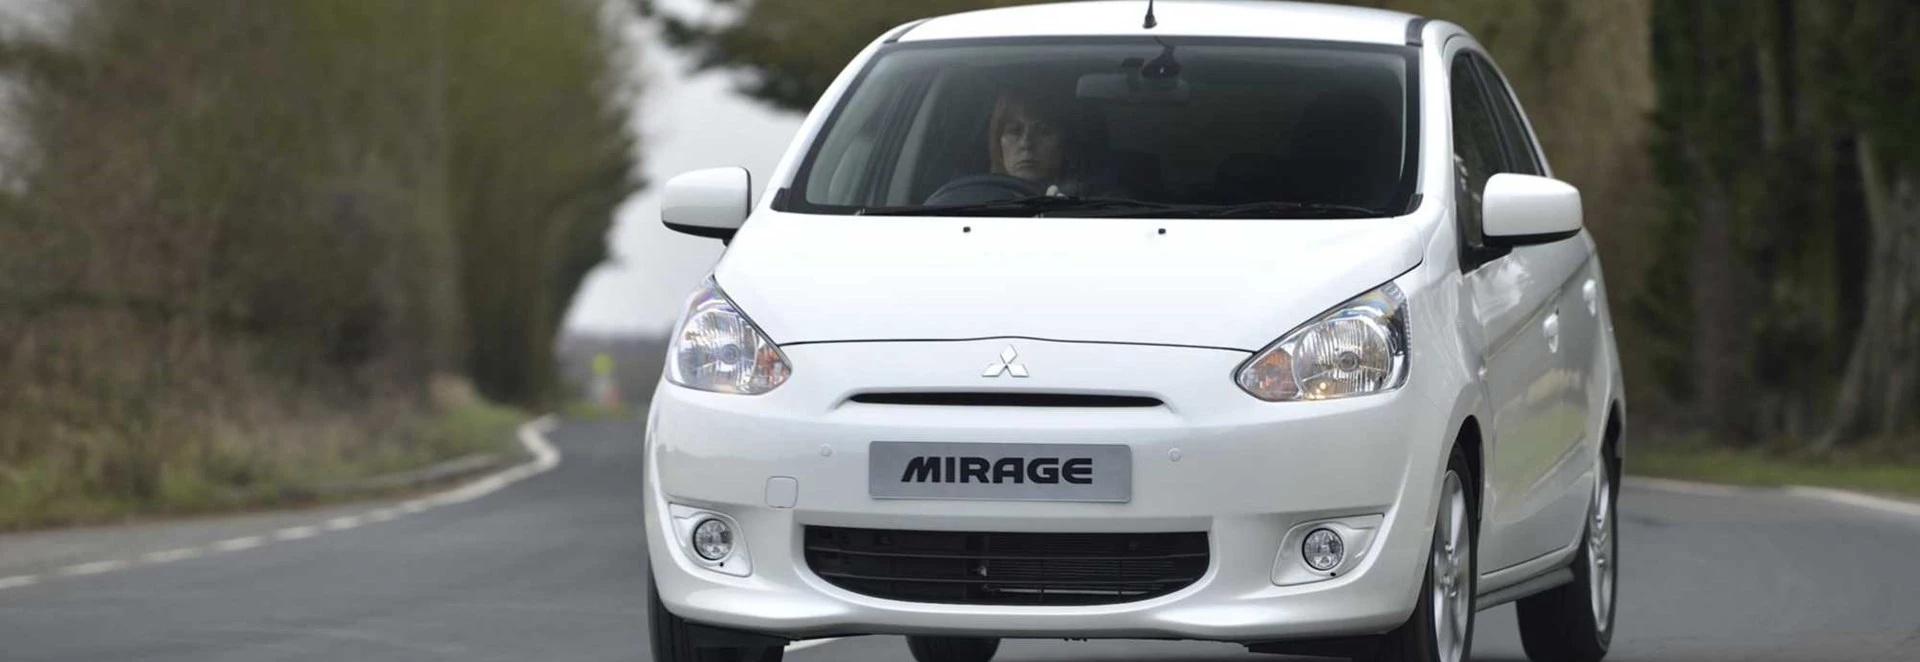 Mitsubishi Mirage hatchback review 